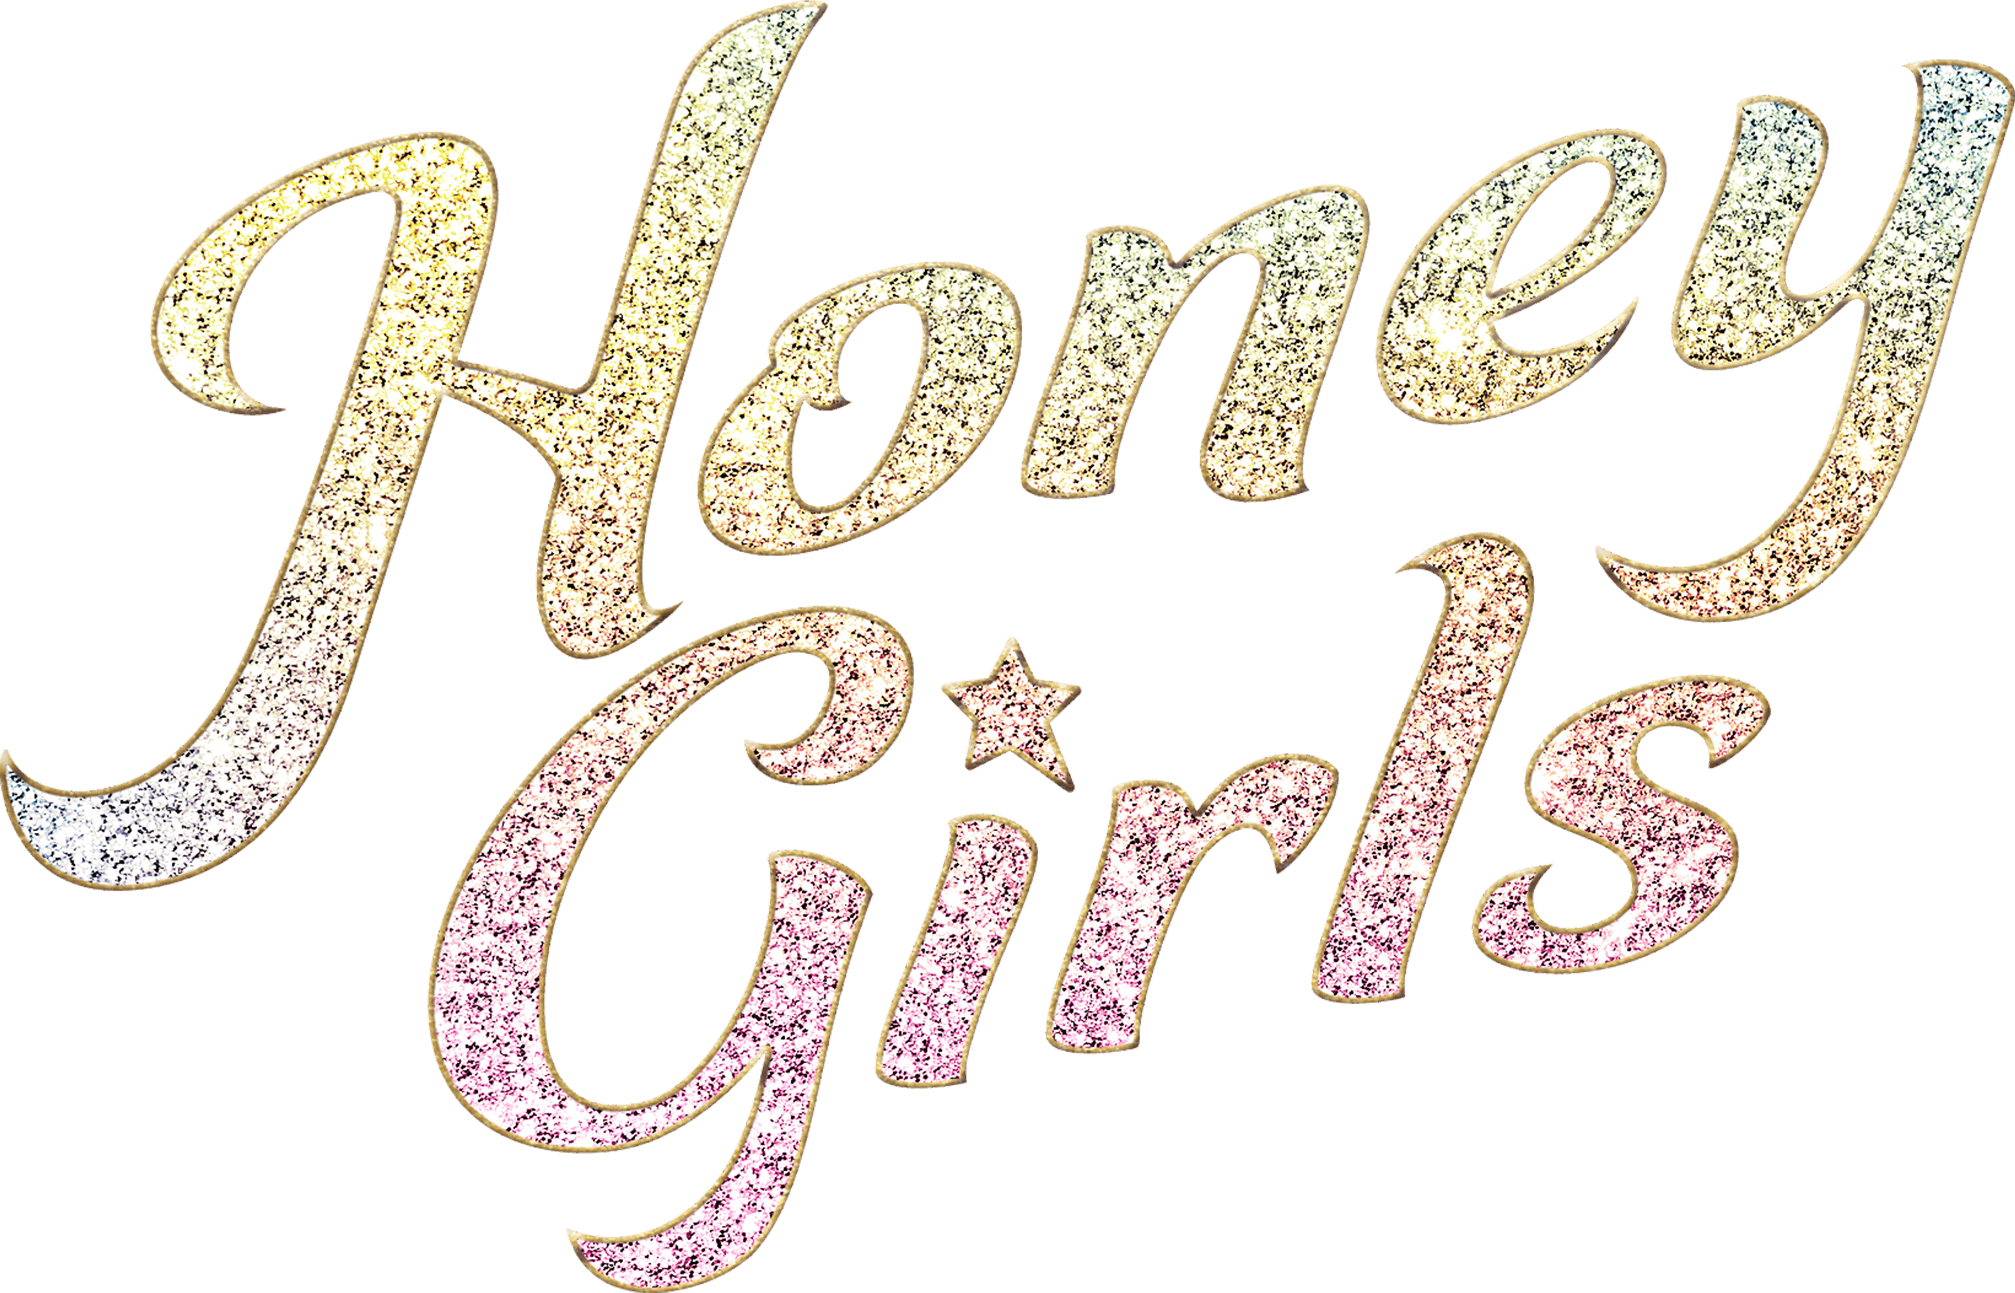 Honey Girls logo